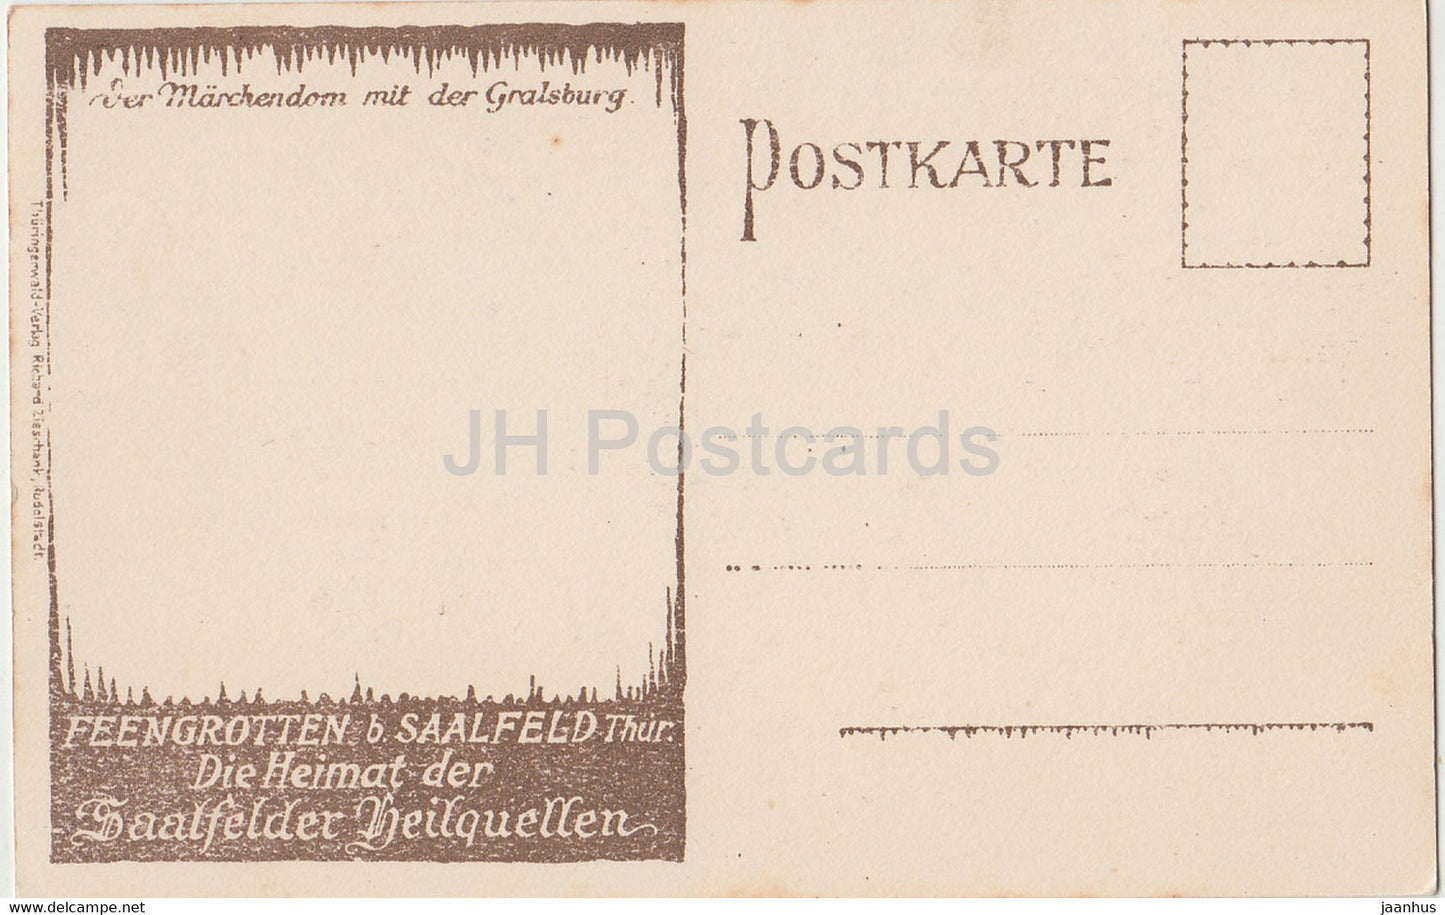 Feengrotten b Saalfeld Thur - Die Heimat der Saalfelder Heilquellen - Marchendom - cave old postcard - Germany - unused